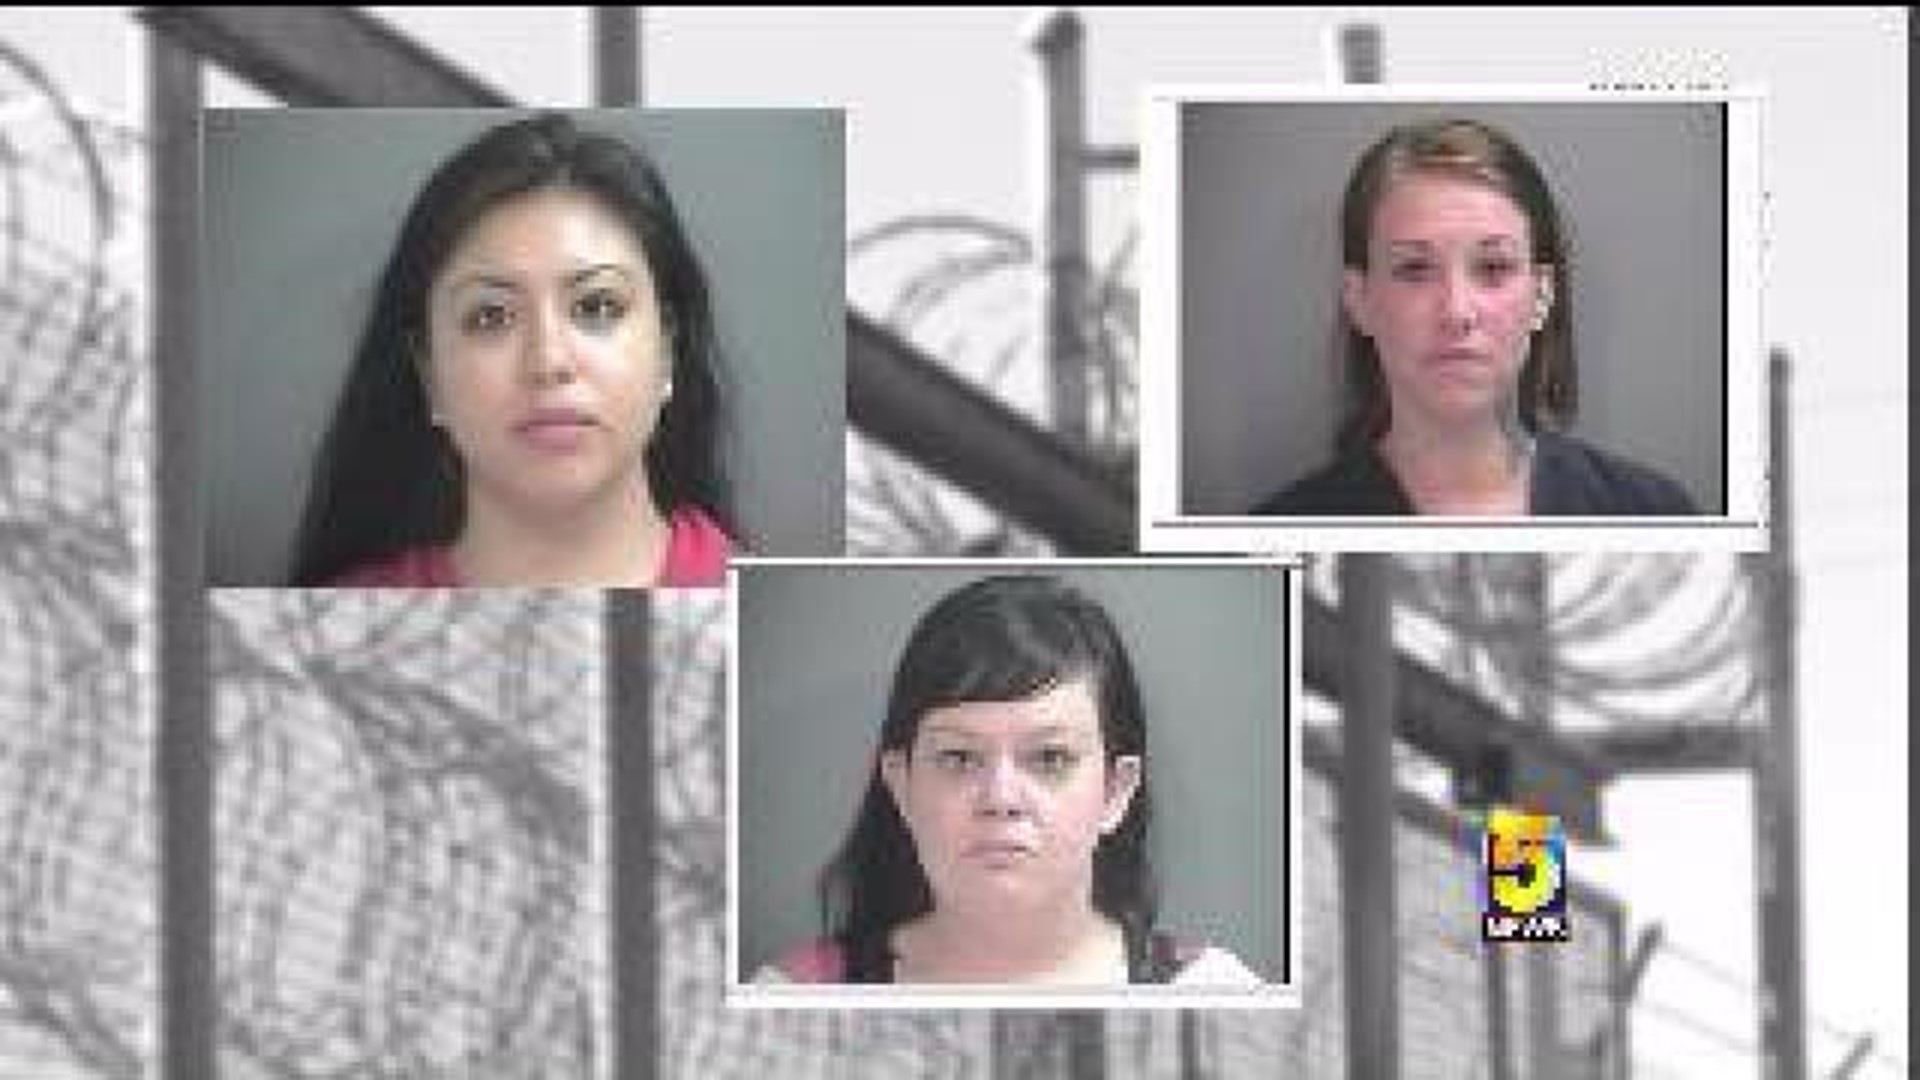 Prostitution Sting In Fayetteville Lands Six Women In Jail